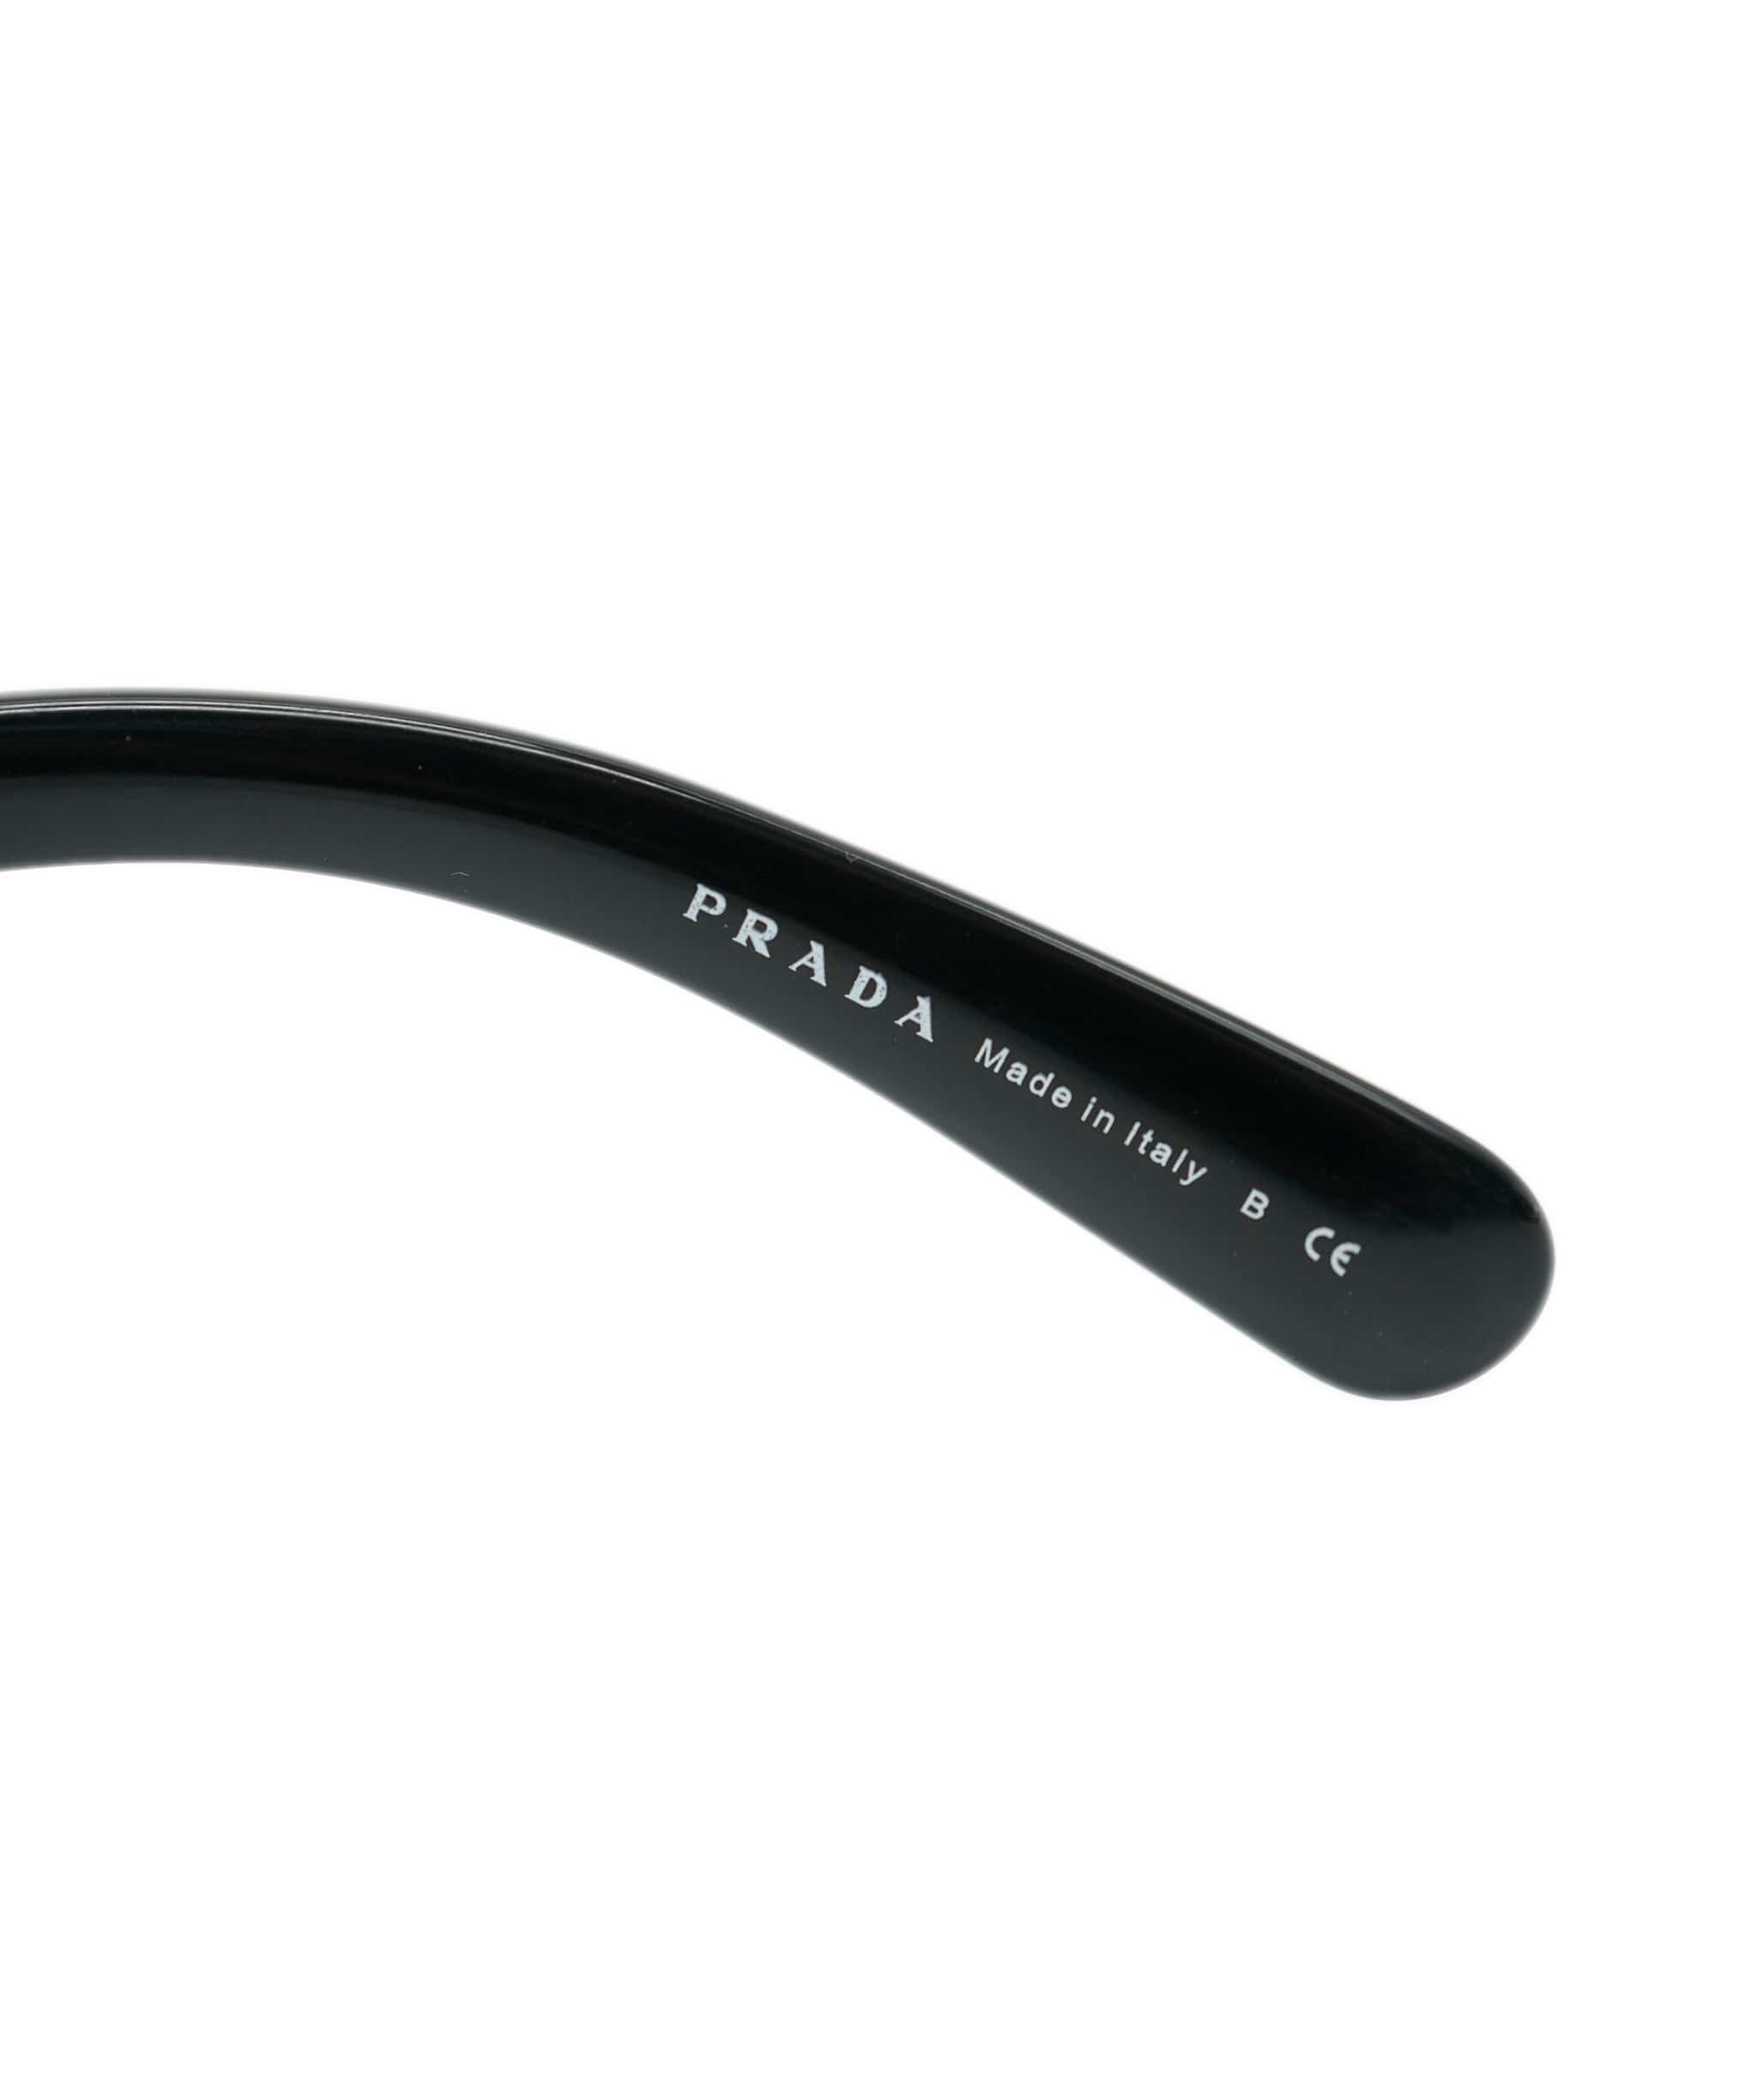 Prada Prada black sunglasses  - AJC0460